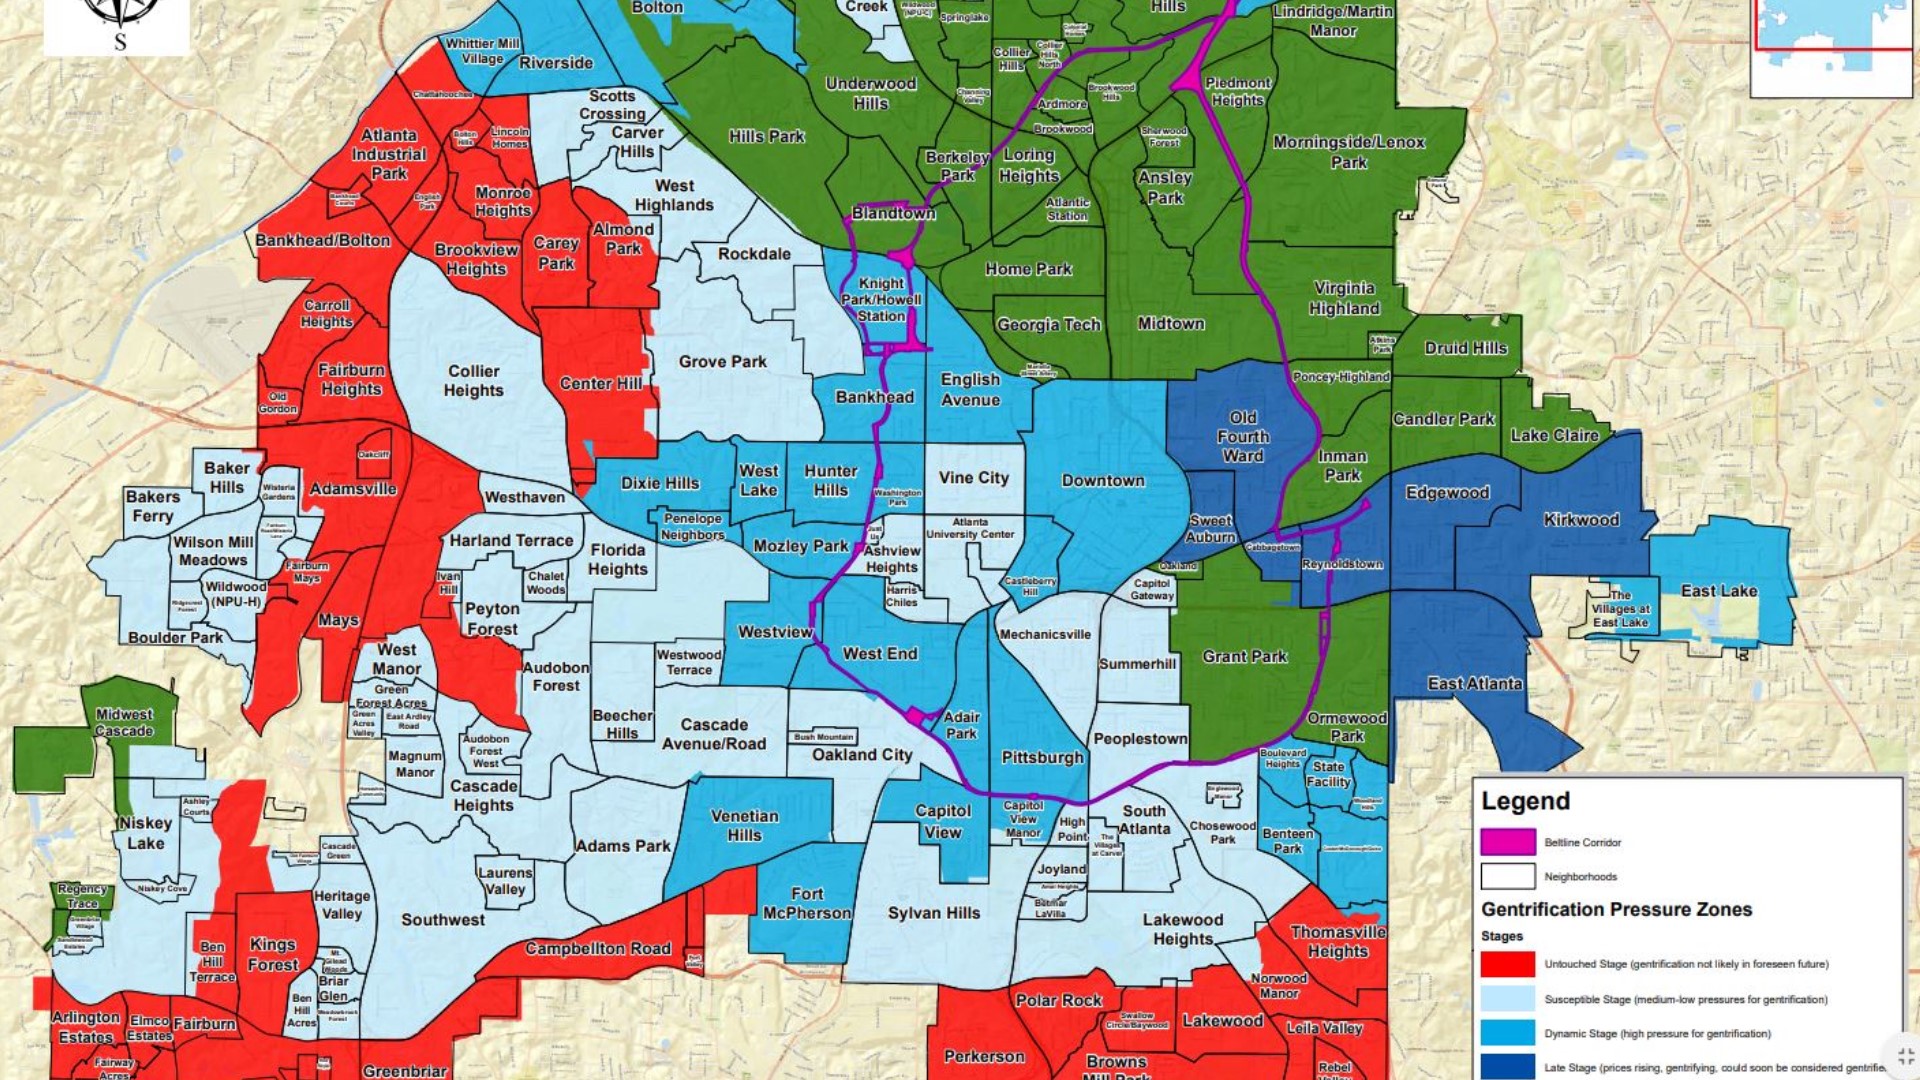 Crime Map For Atlanta Ga 